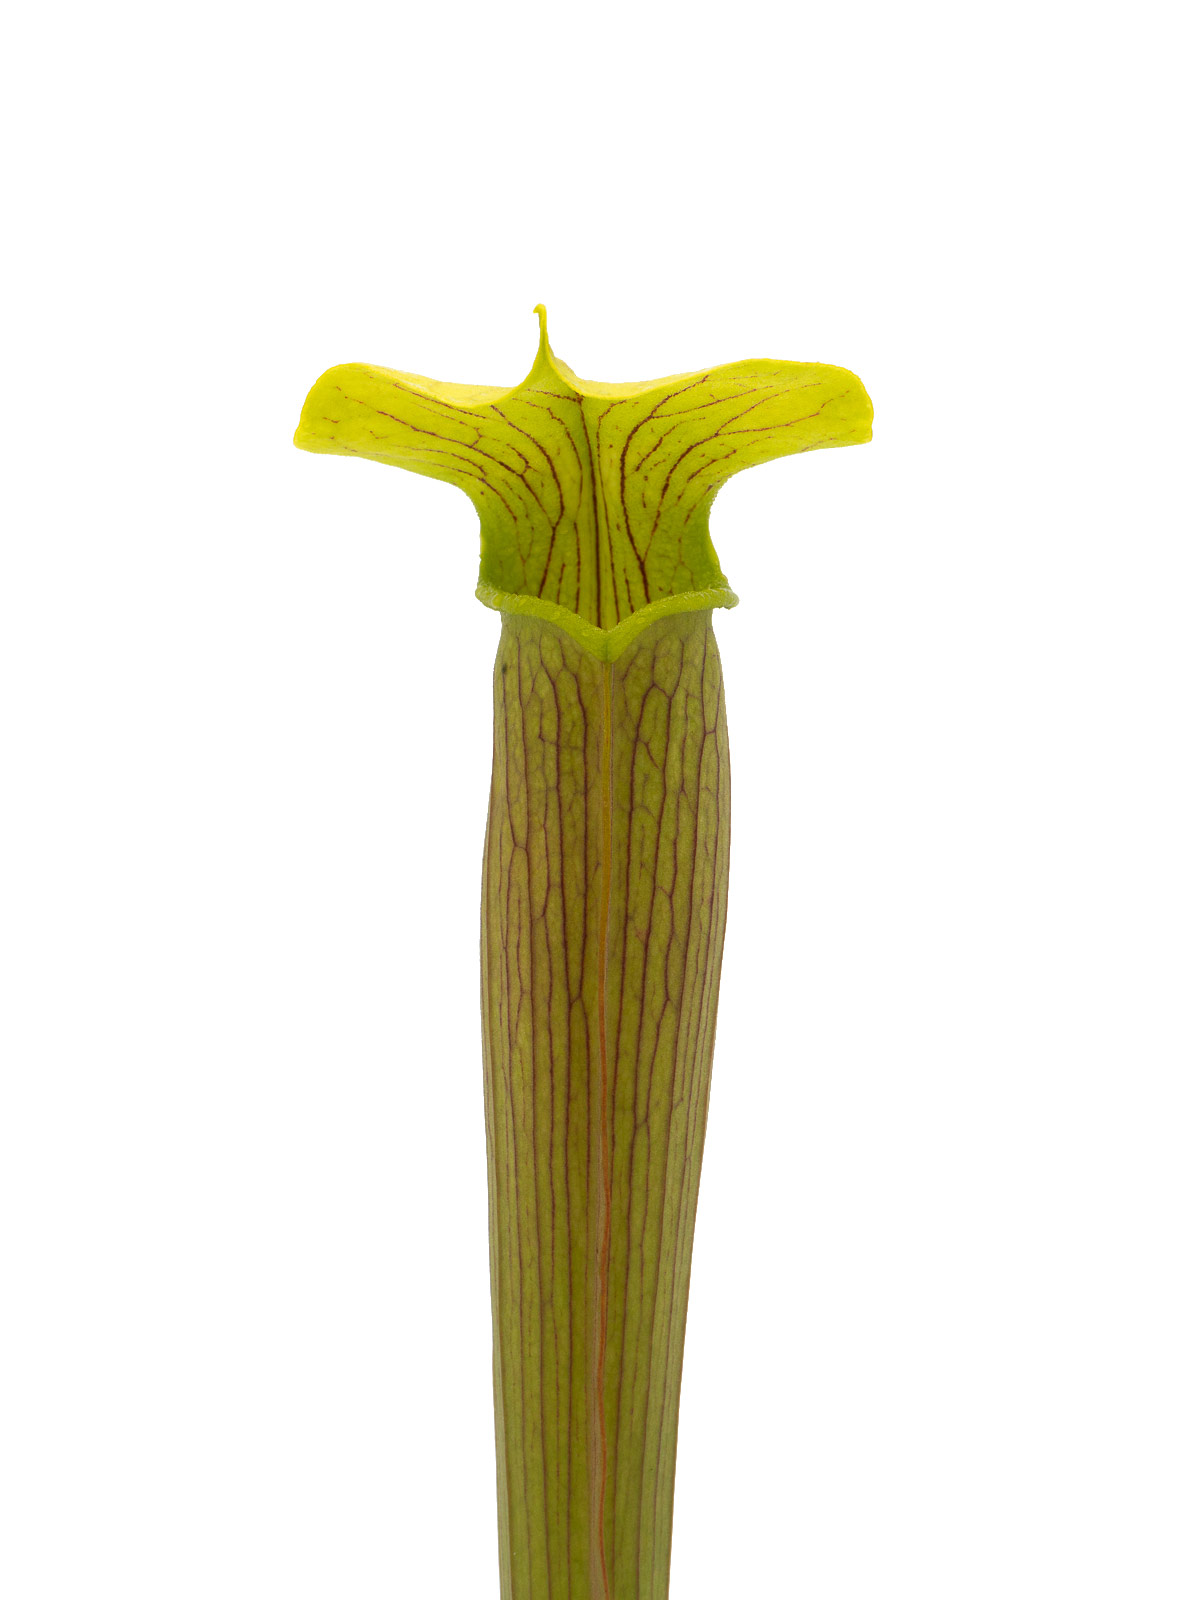 Sarracenia alata - giant form, BG Prague, S4AD